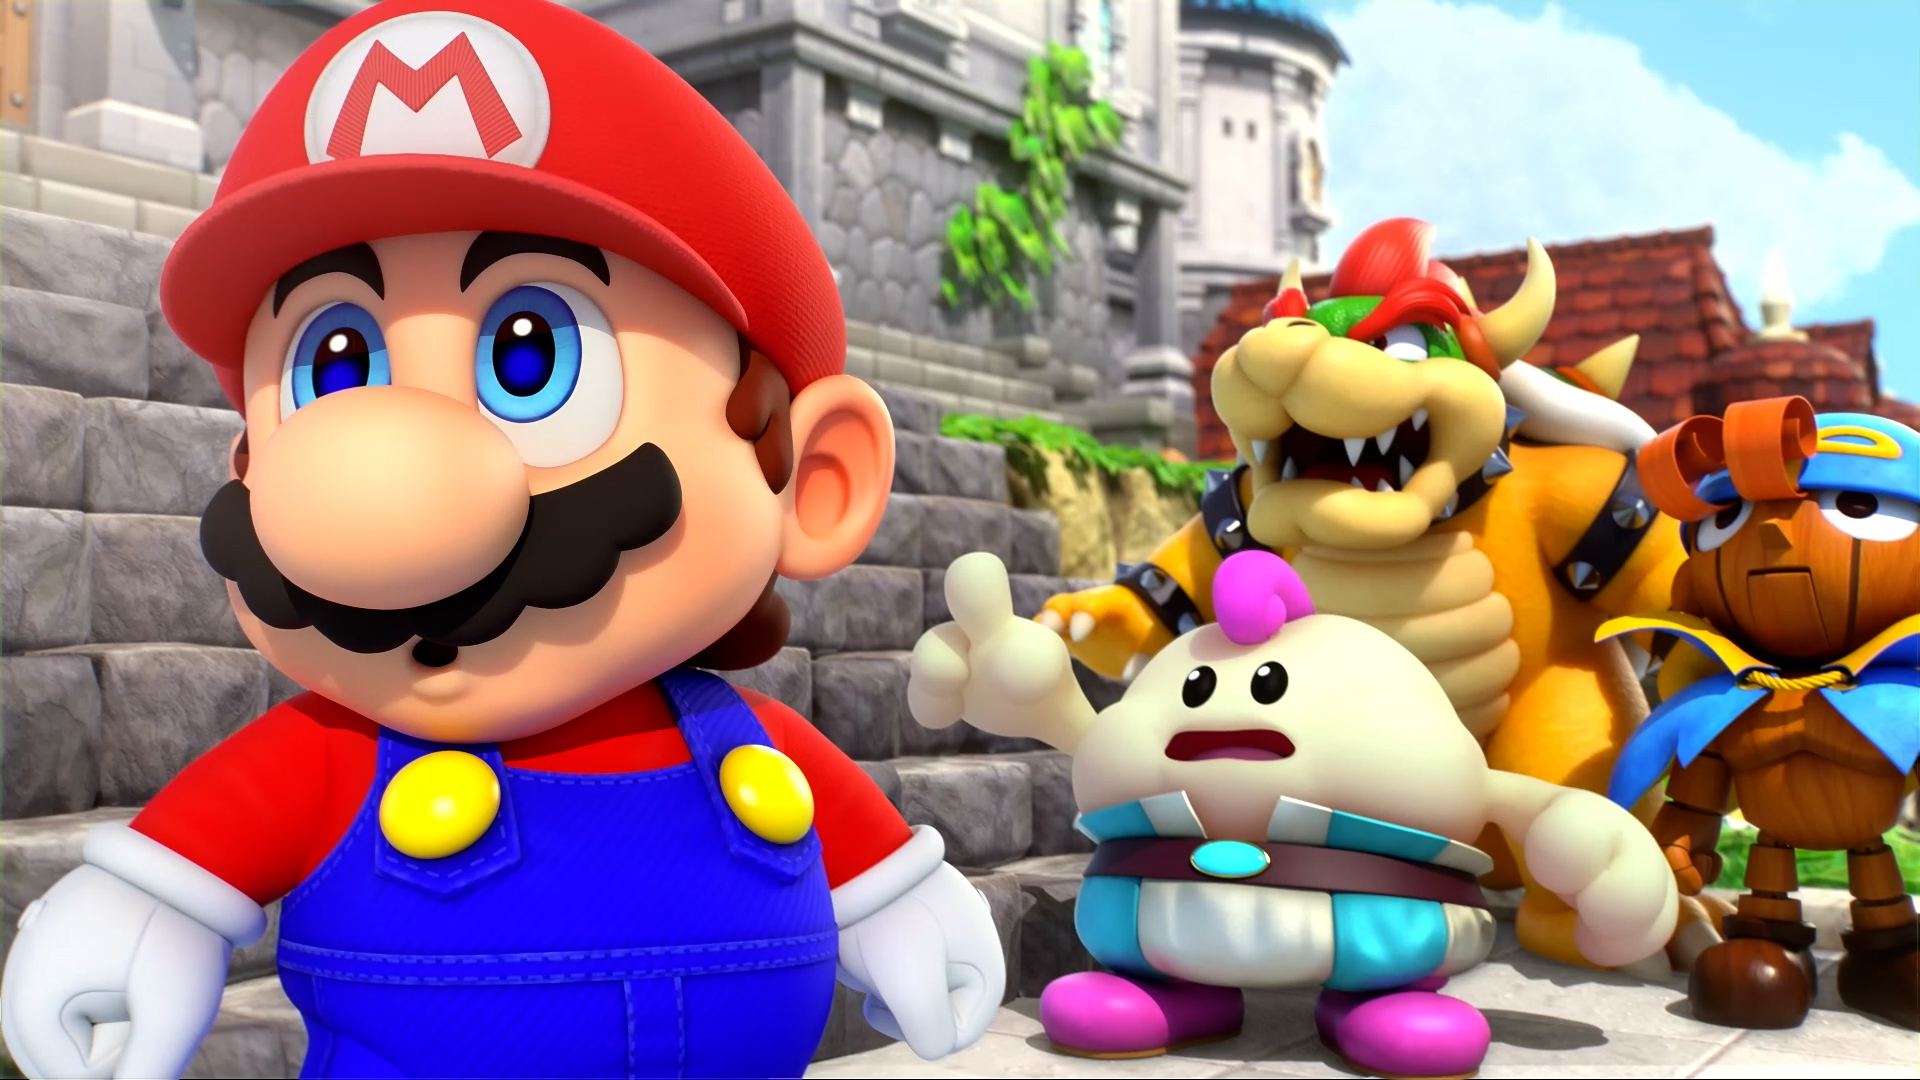 Super Mario RPG : Mario dans un “nouveau” rôle